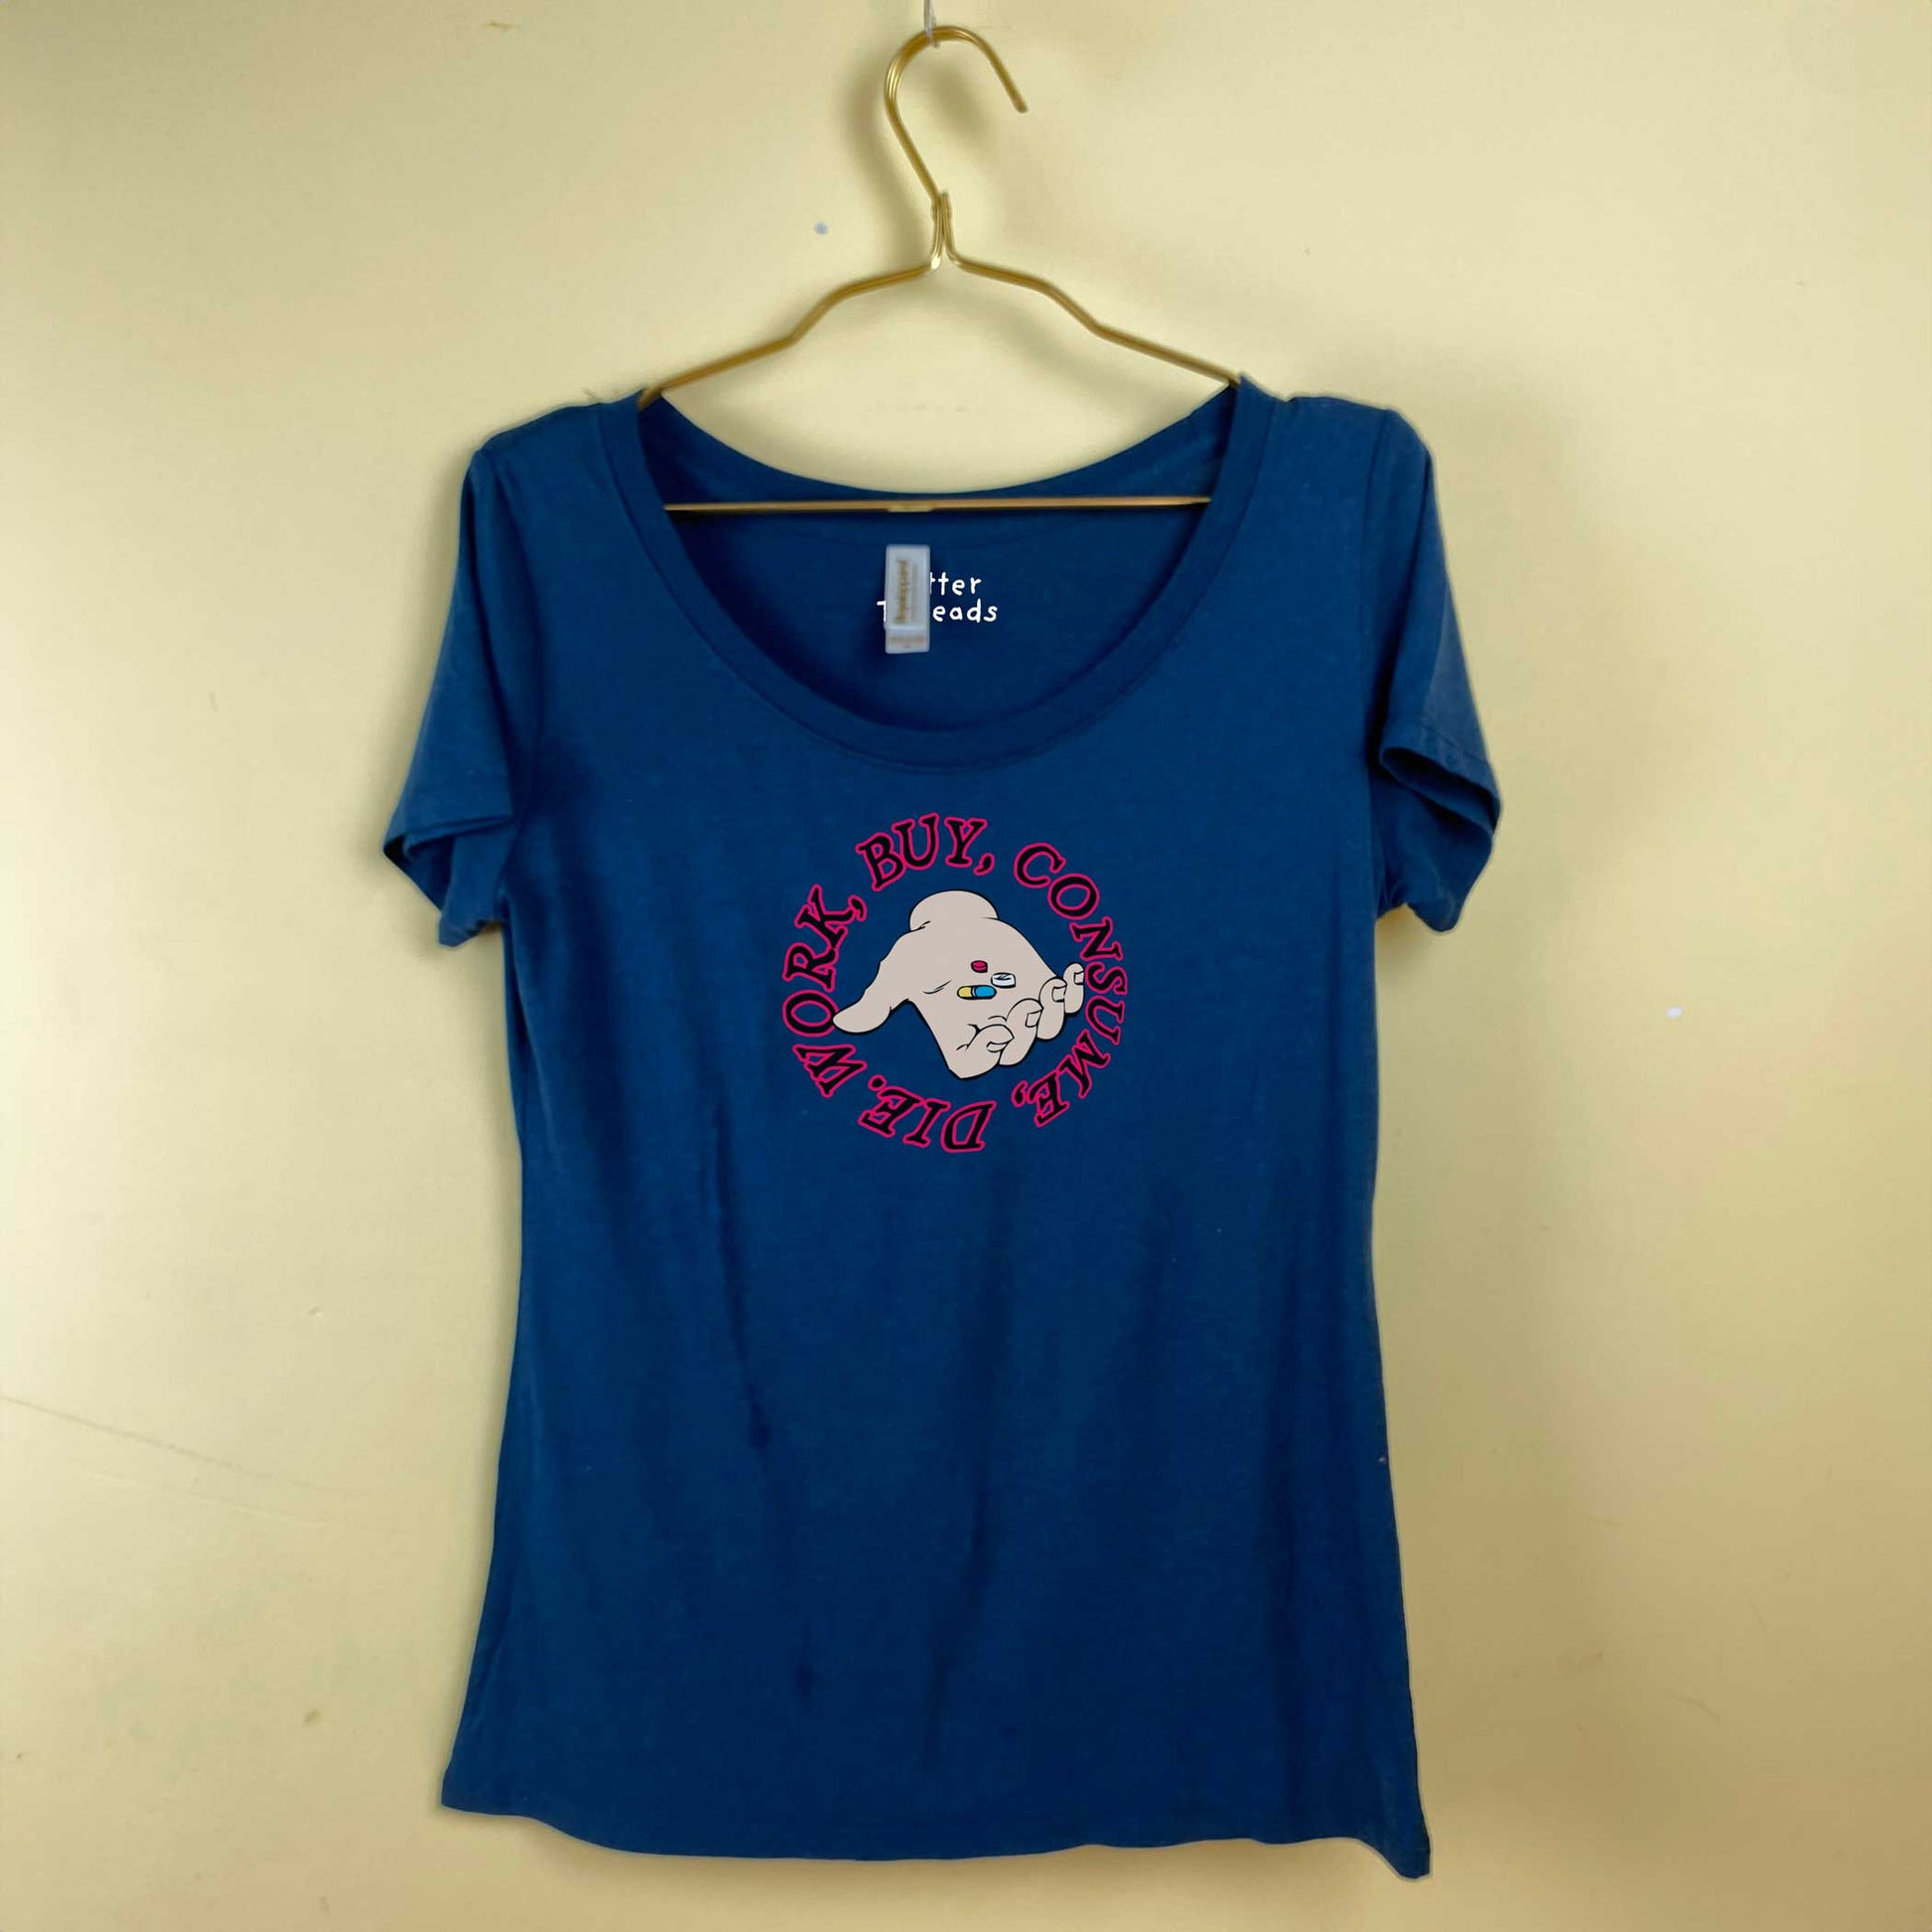 Work, Buy, Consume, Die Bamboo/Organic Cotton Women's Scoop Neck T-Shirt-T-shirts-Dark Blue-S-Hagsters